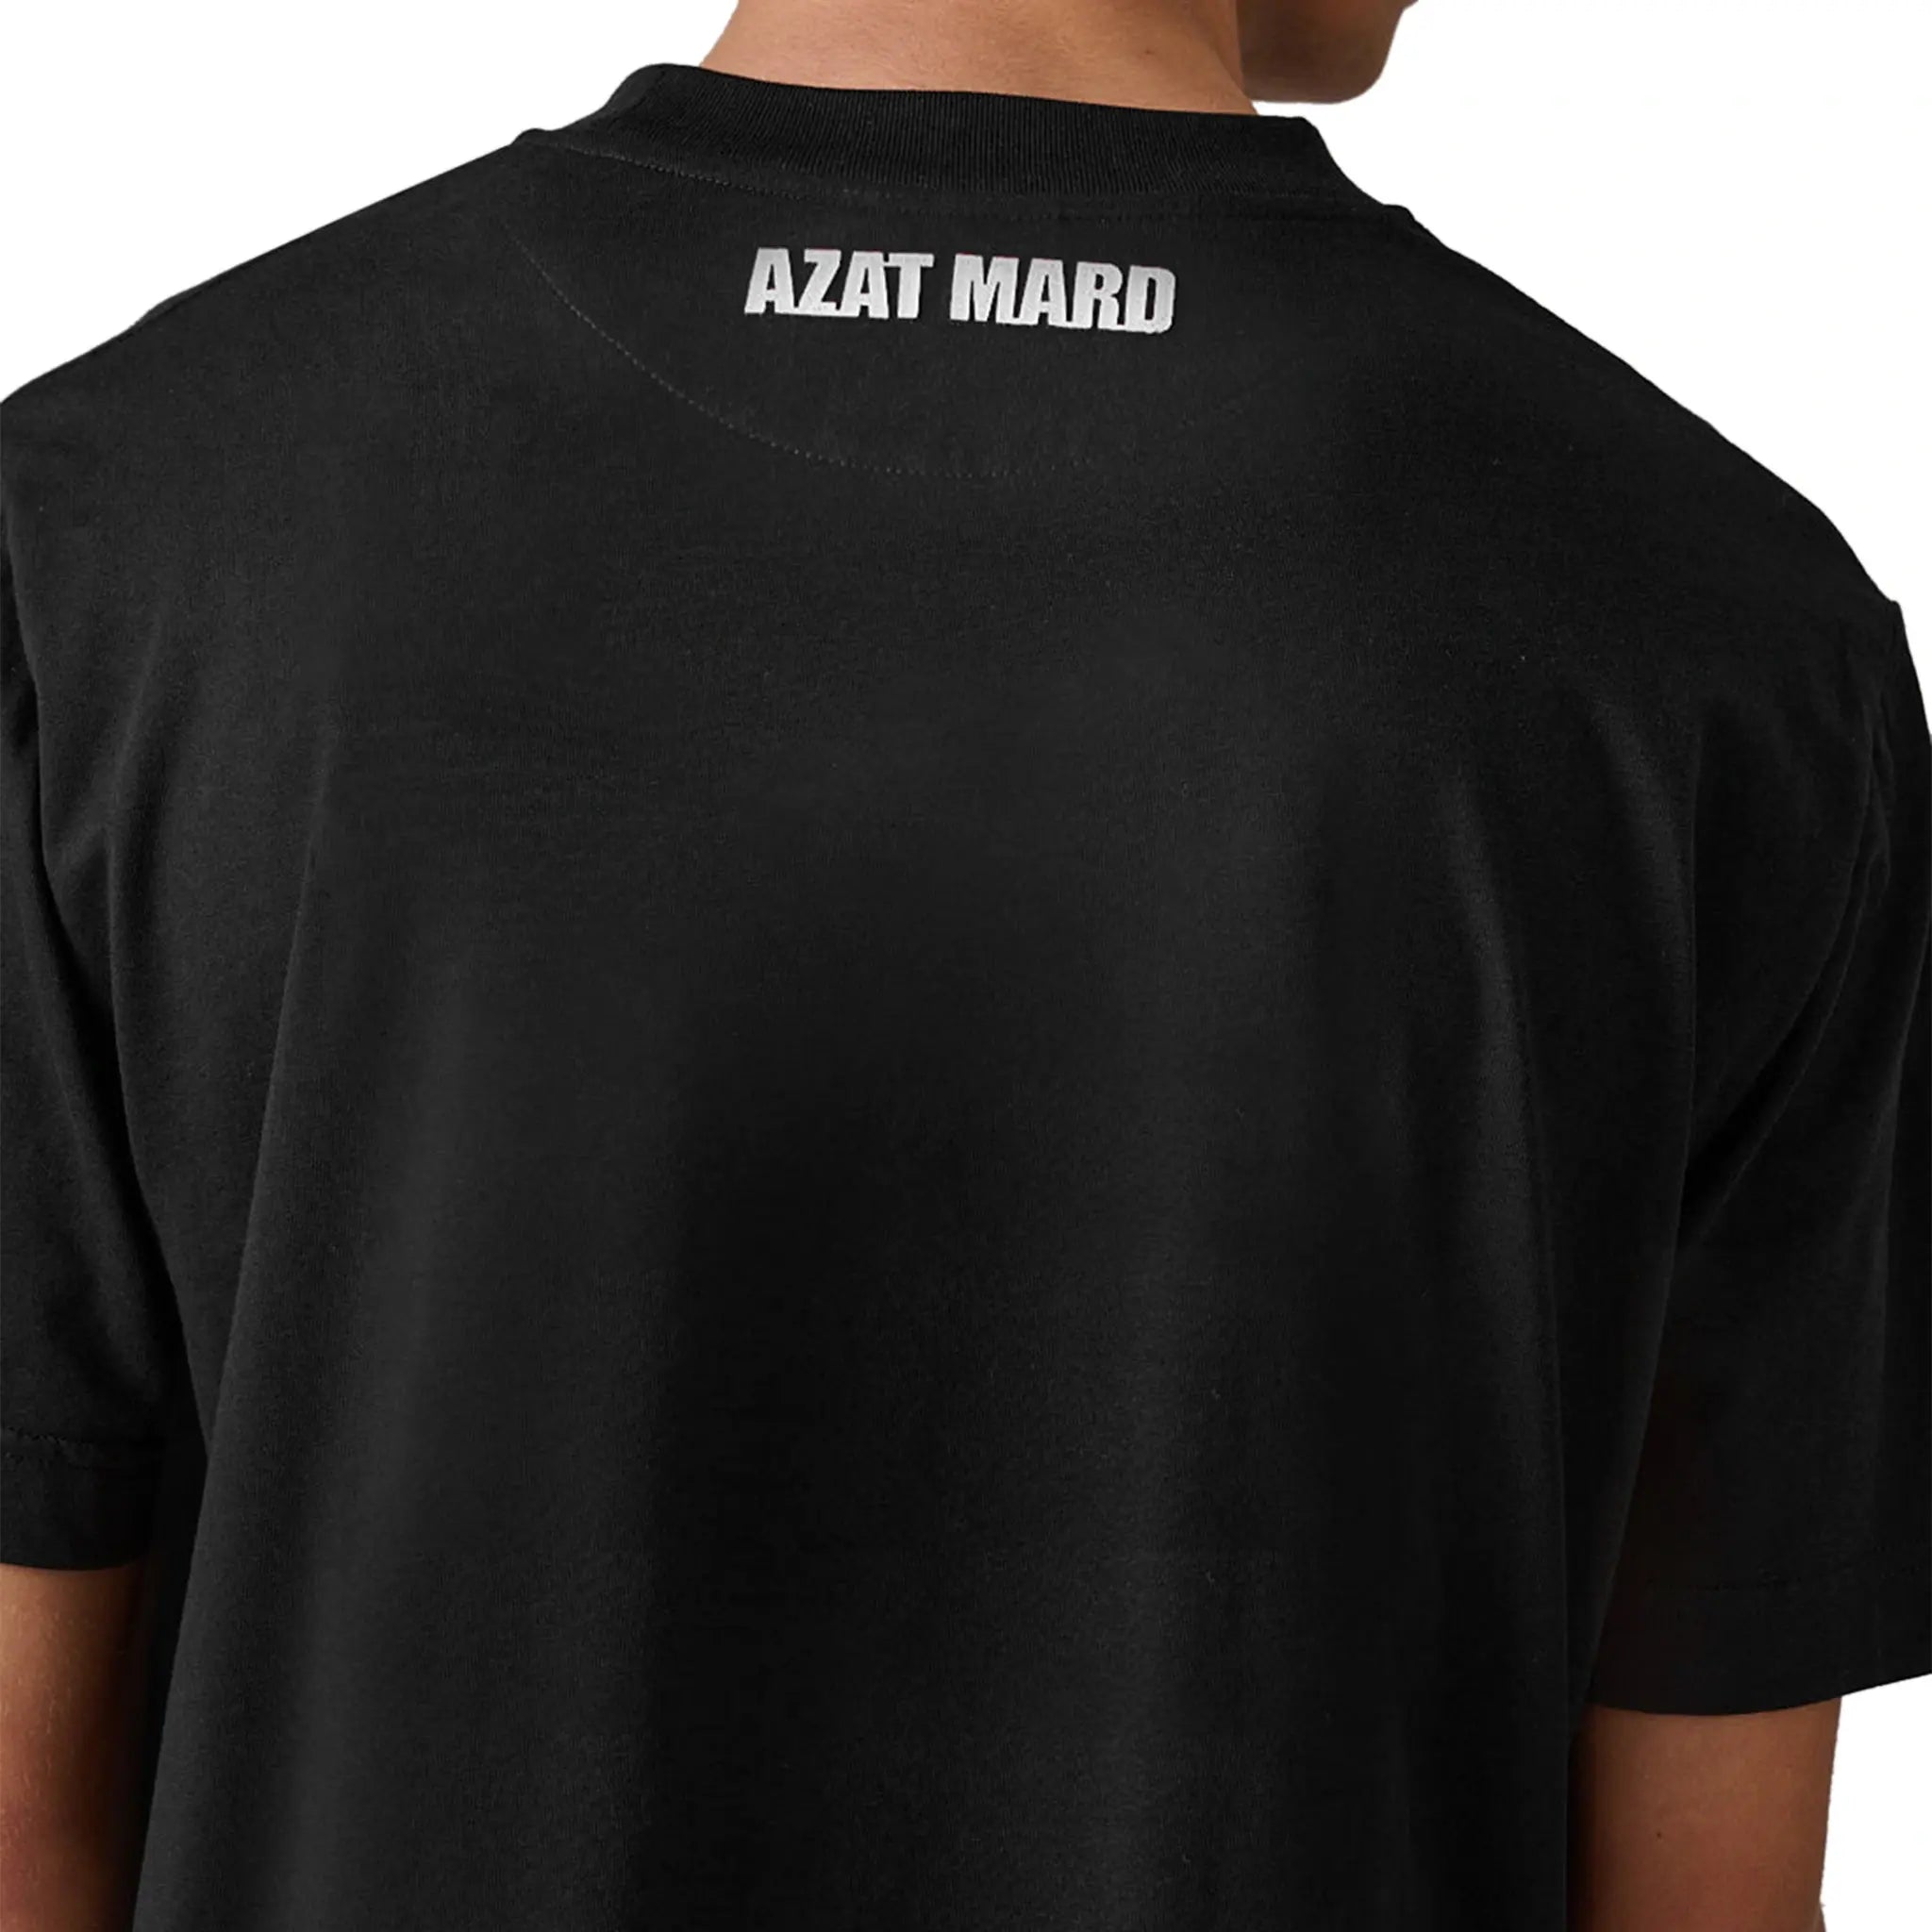 Back detail view of Azat Mard Lovers Club T Shirt Black